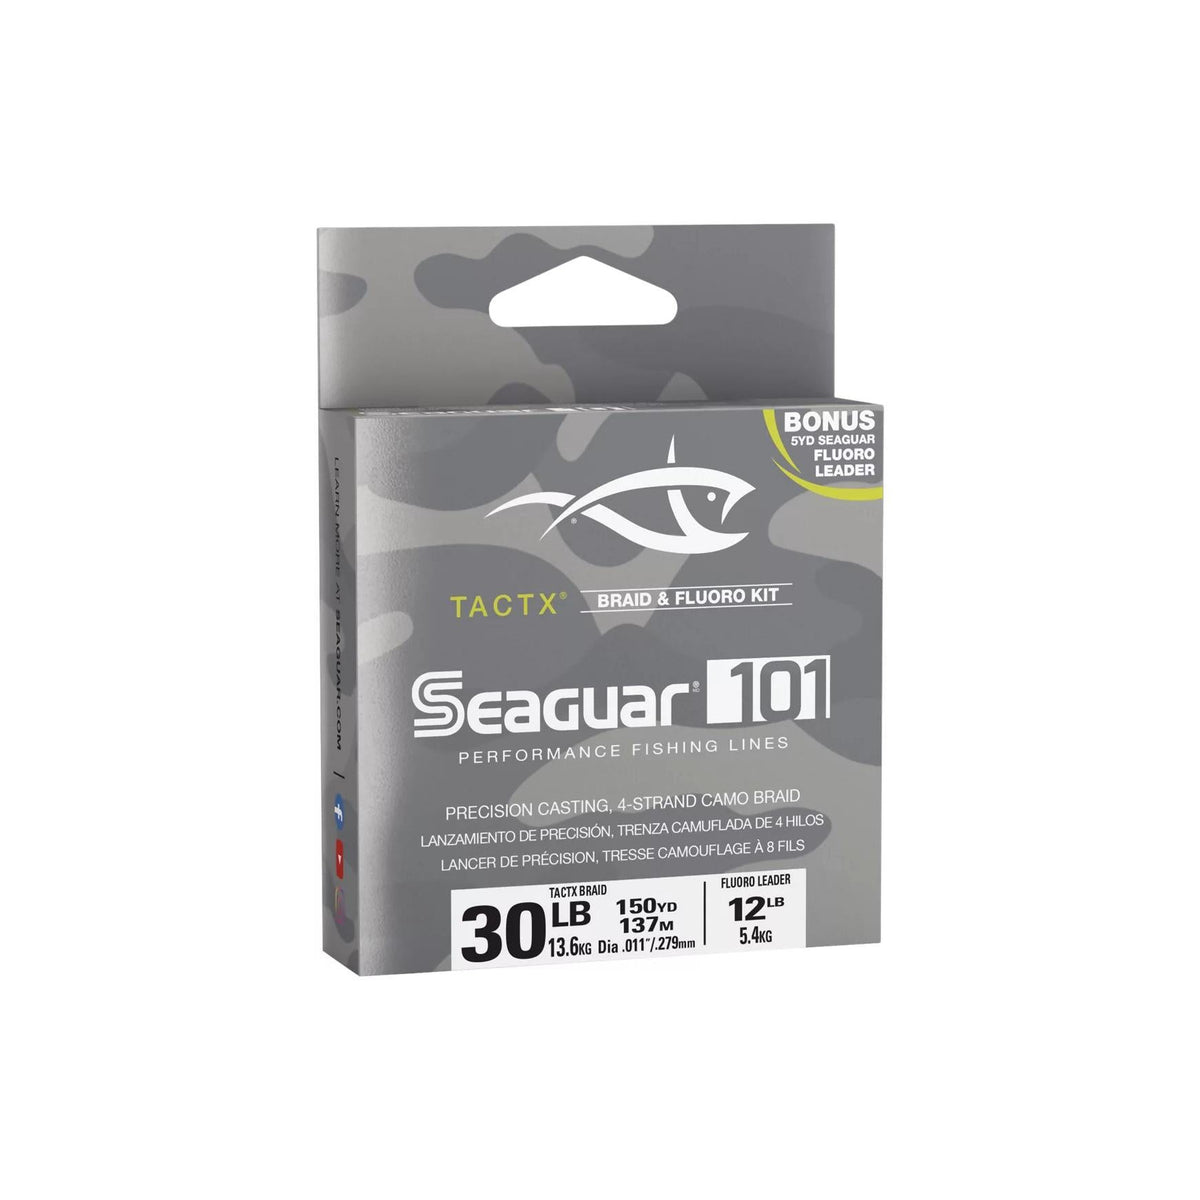 Seaguar TactX Braid